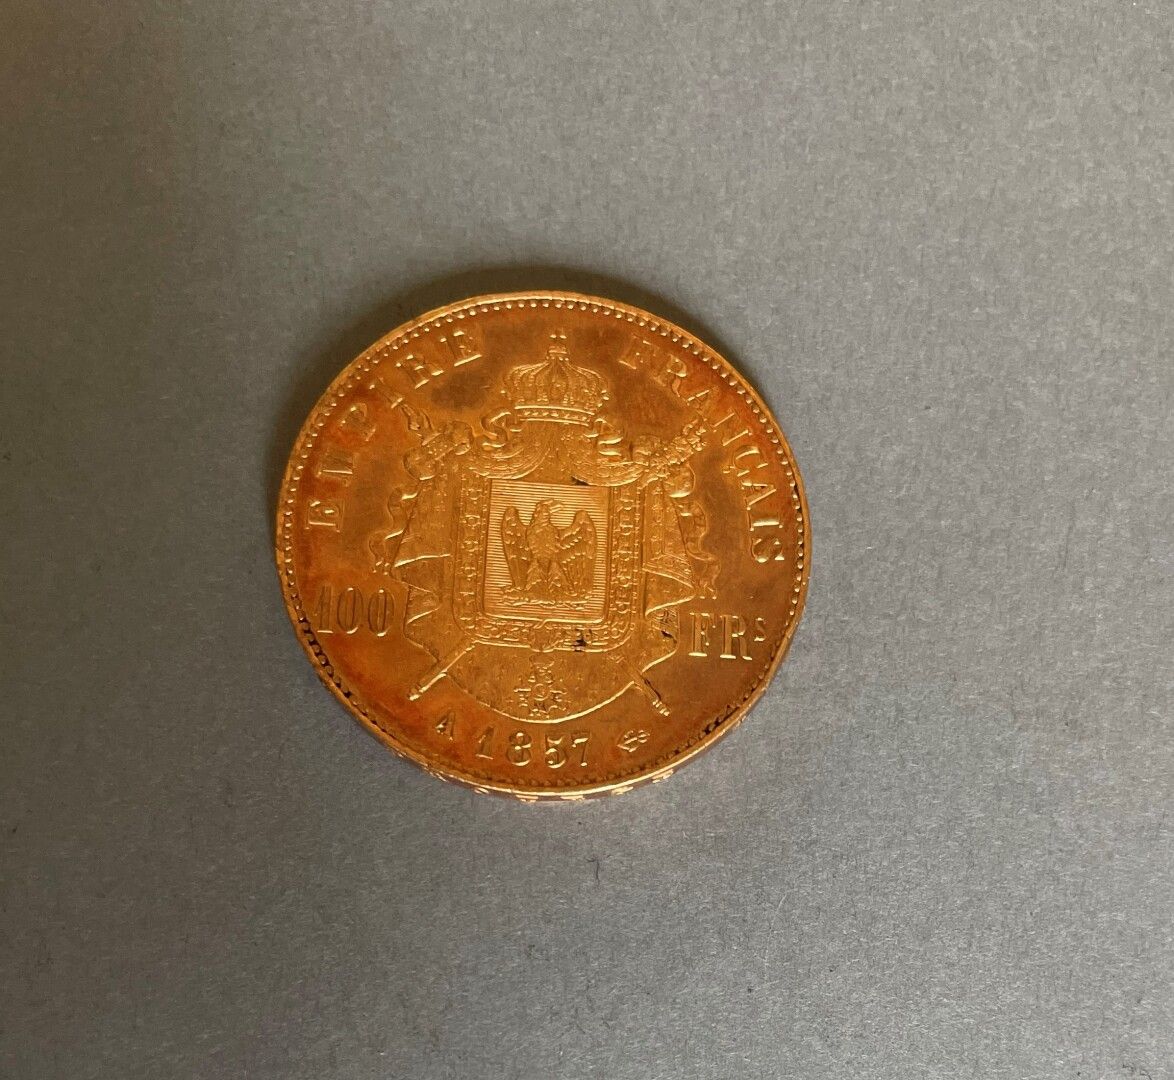 Null 第二帝国

100法郎金币，拿破仑三世光头，1857年，A.巴黎

重量：32.18克。

五彩斑斓的铜锈，磨损。